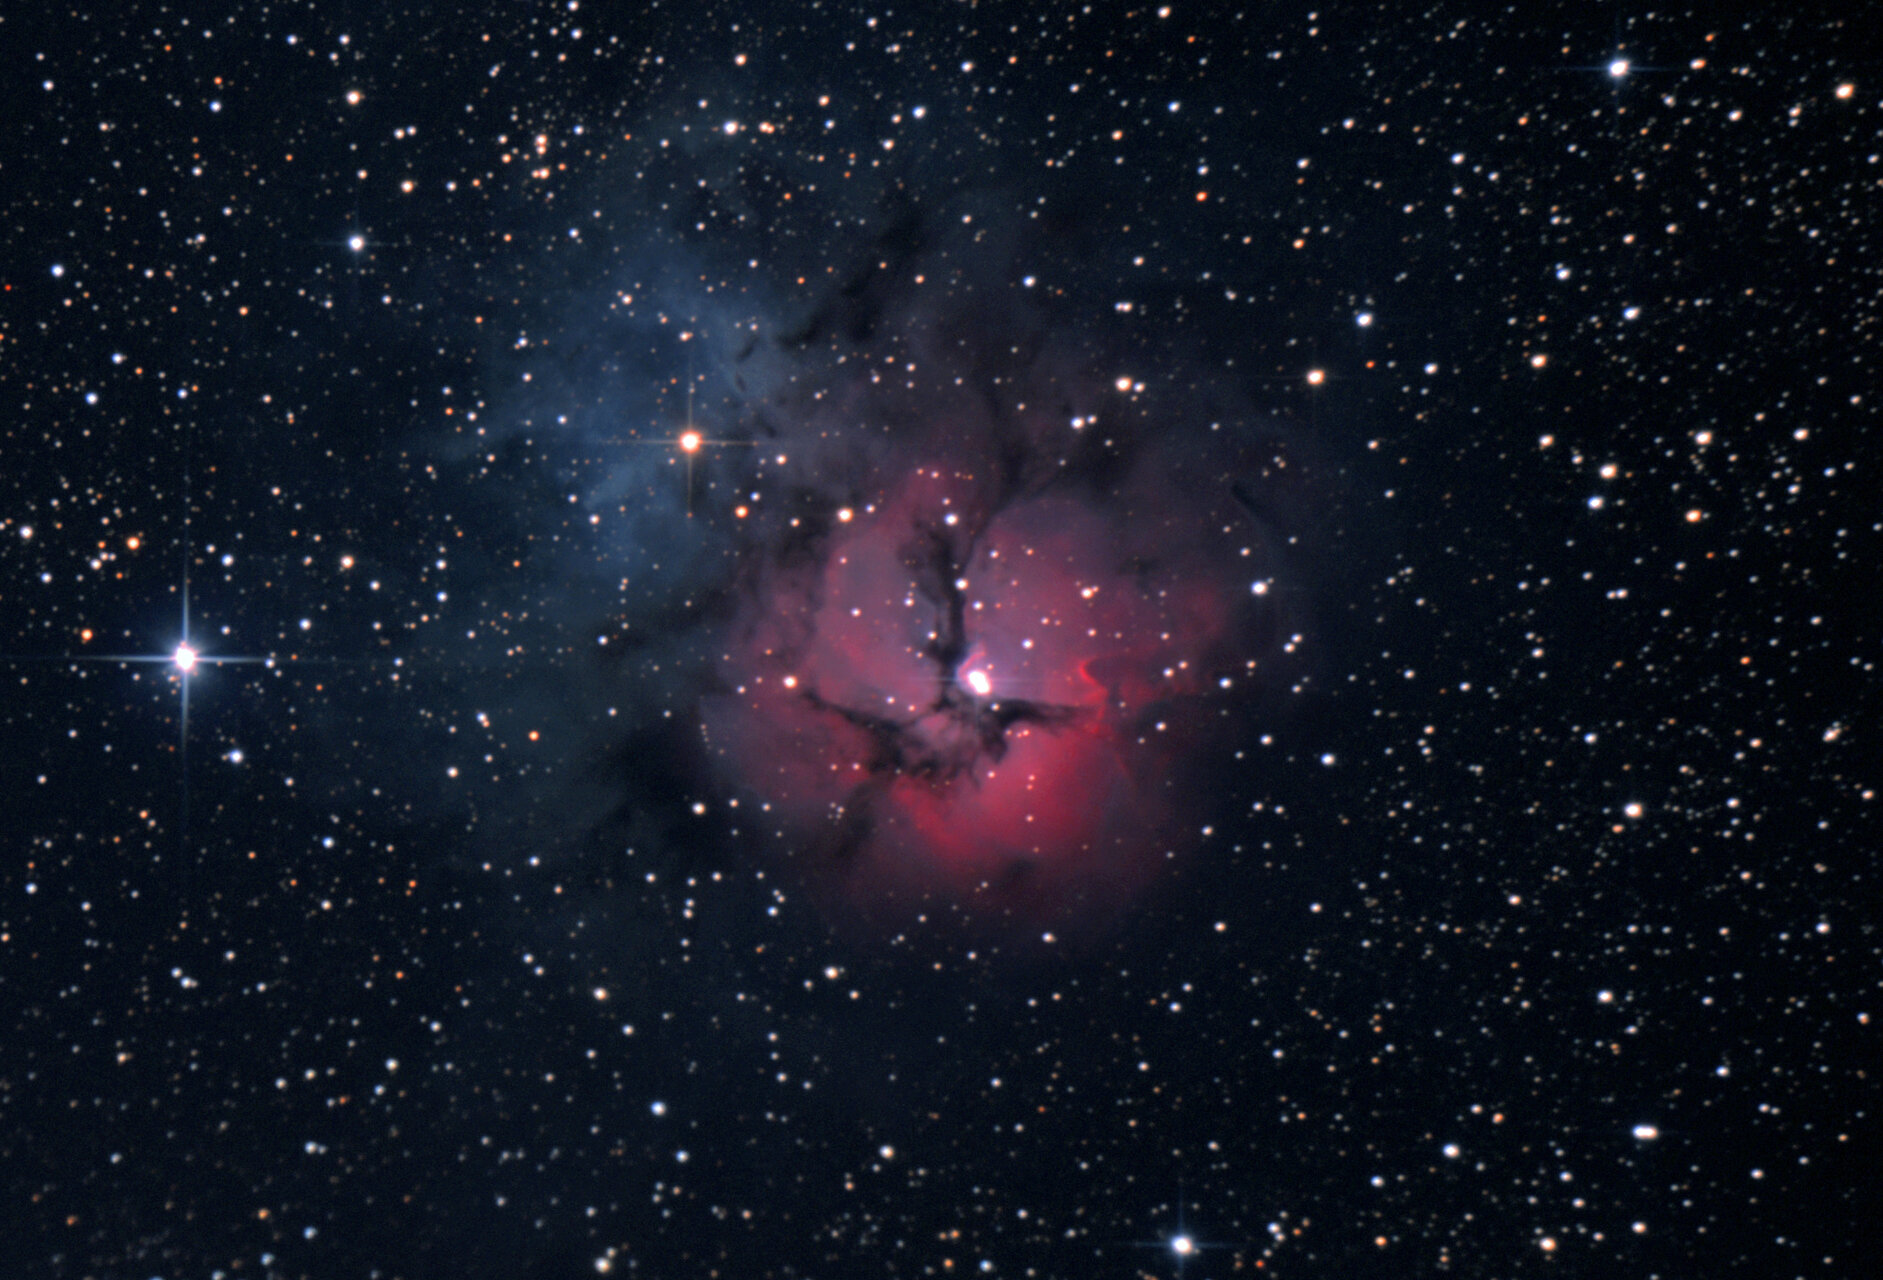 Trifid nebula | Author Dimitar Zdravkov - м.здравков | PHOTO FORUM